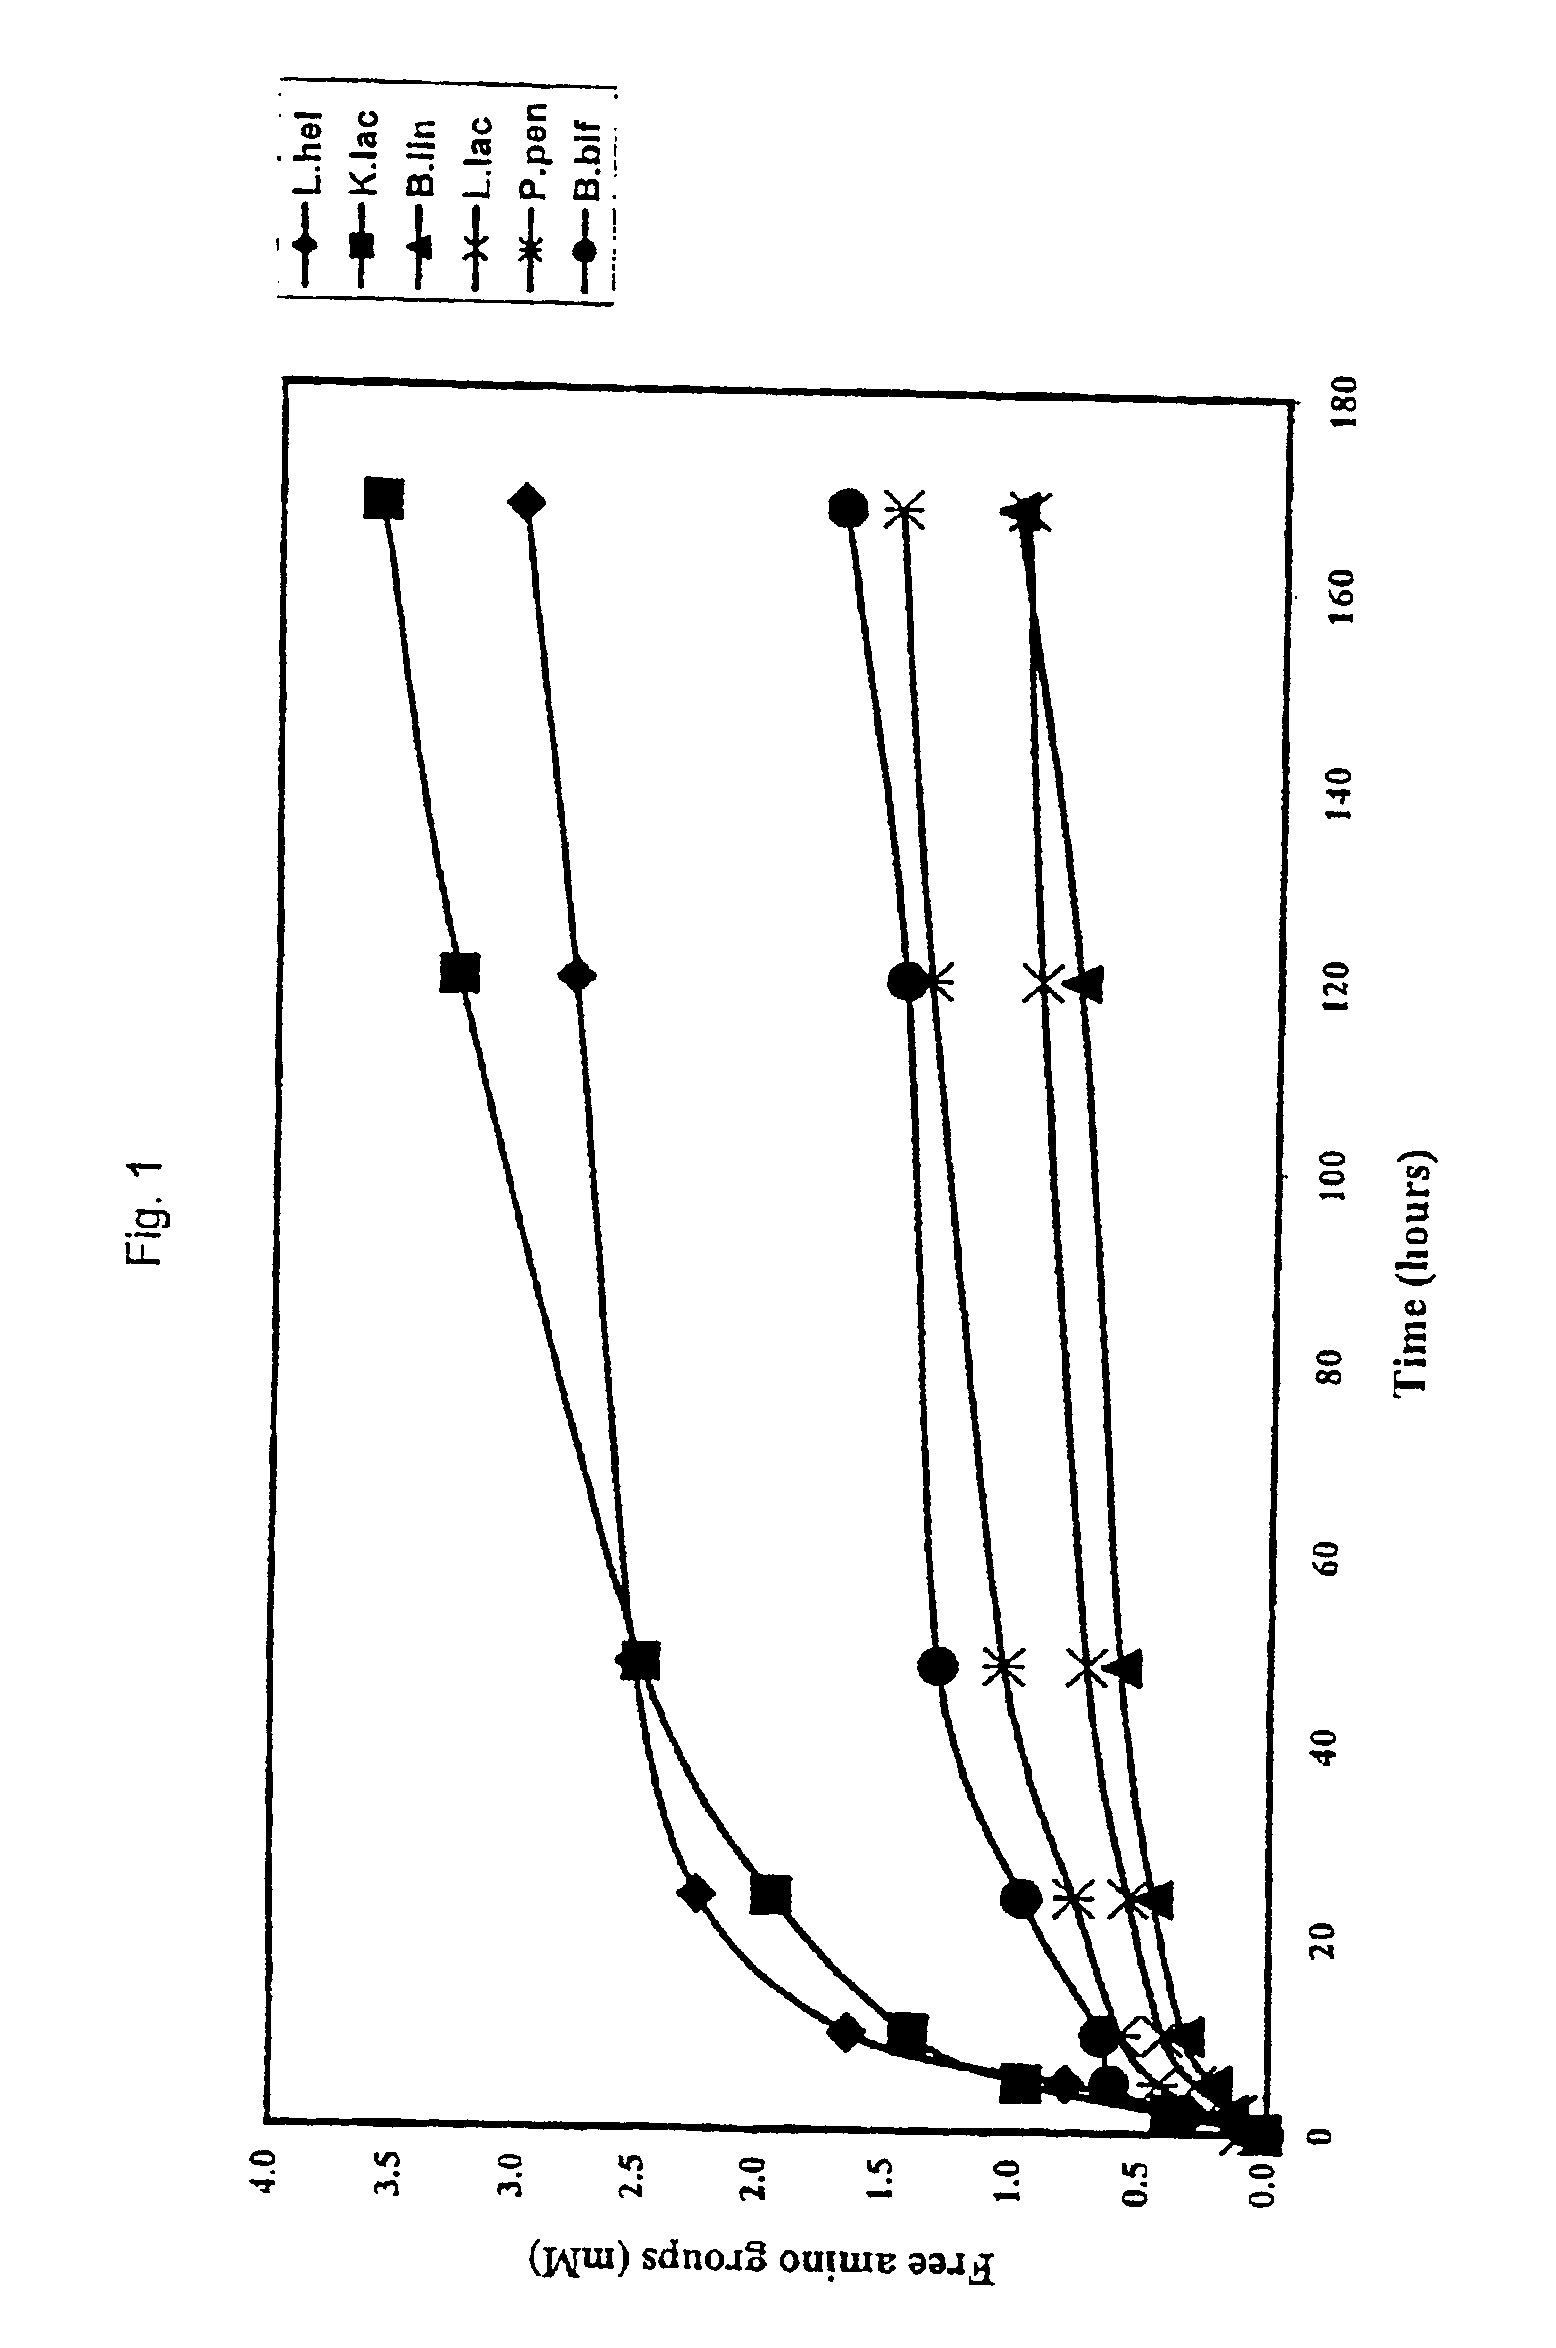 Kluyveromyces lactis as attenuated starter